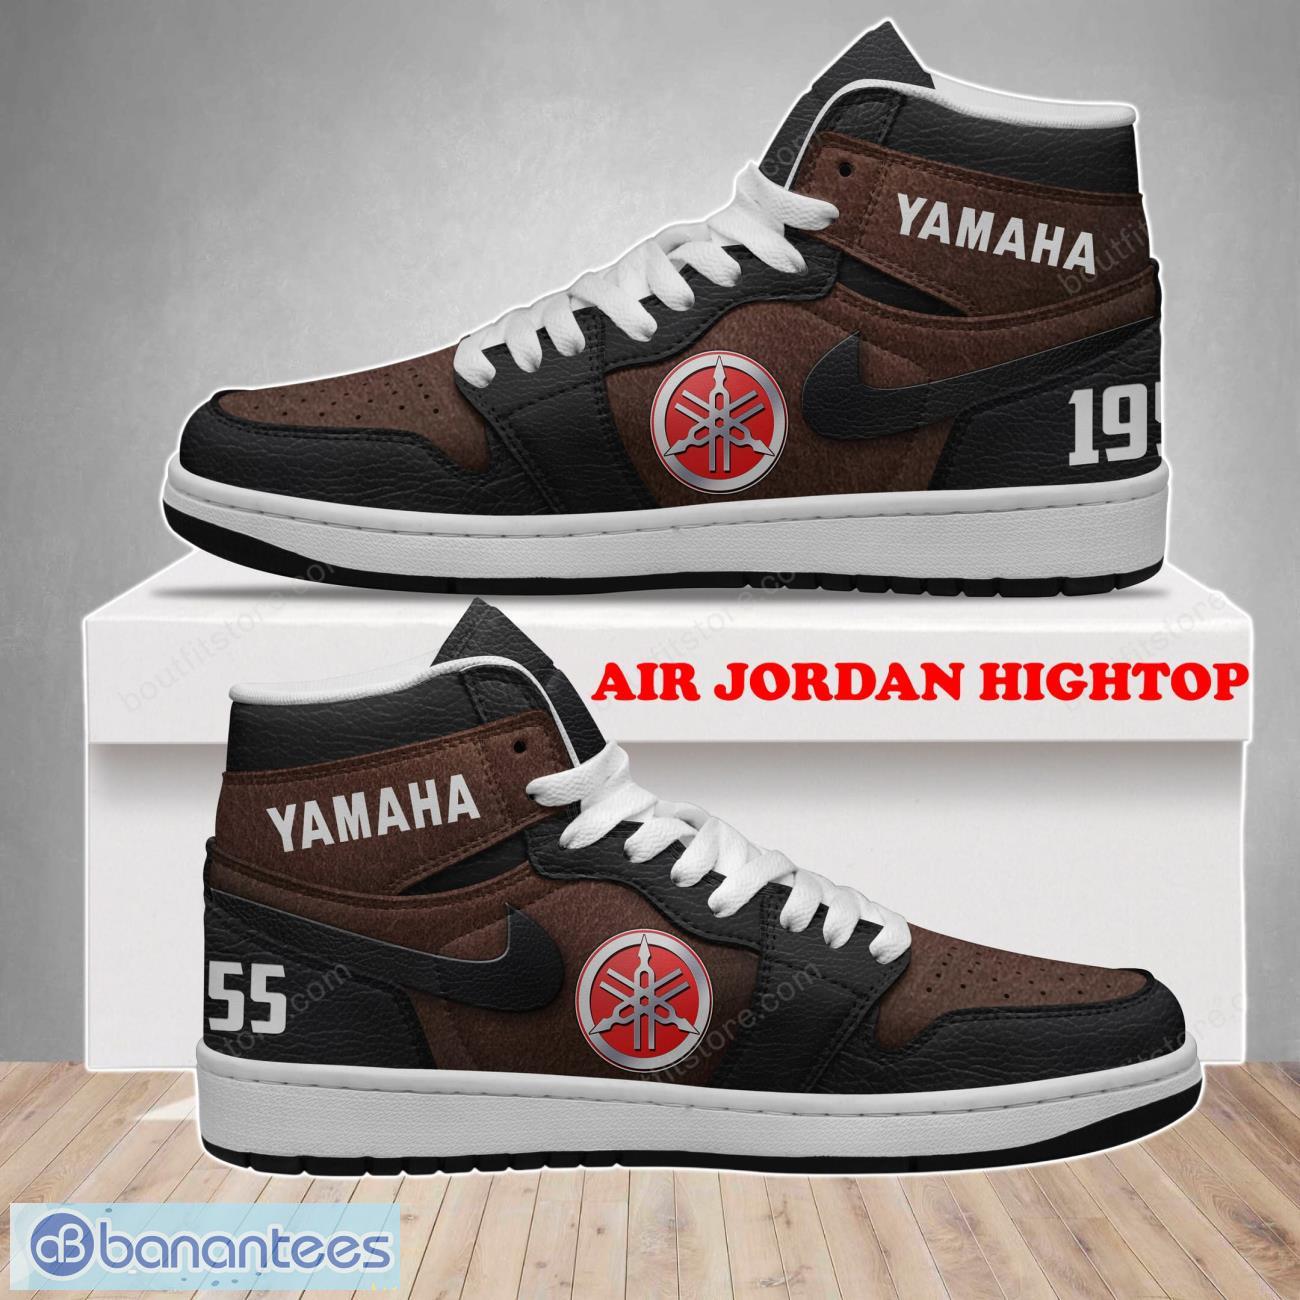 Yamaha Air Jordan Hightop Classic Style For Men Women Product Photo 1